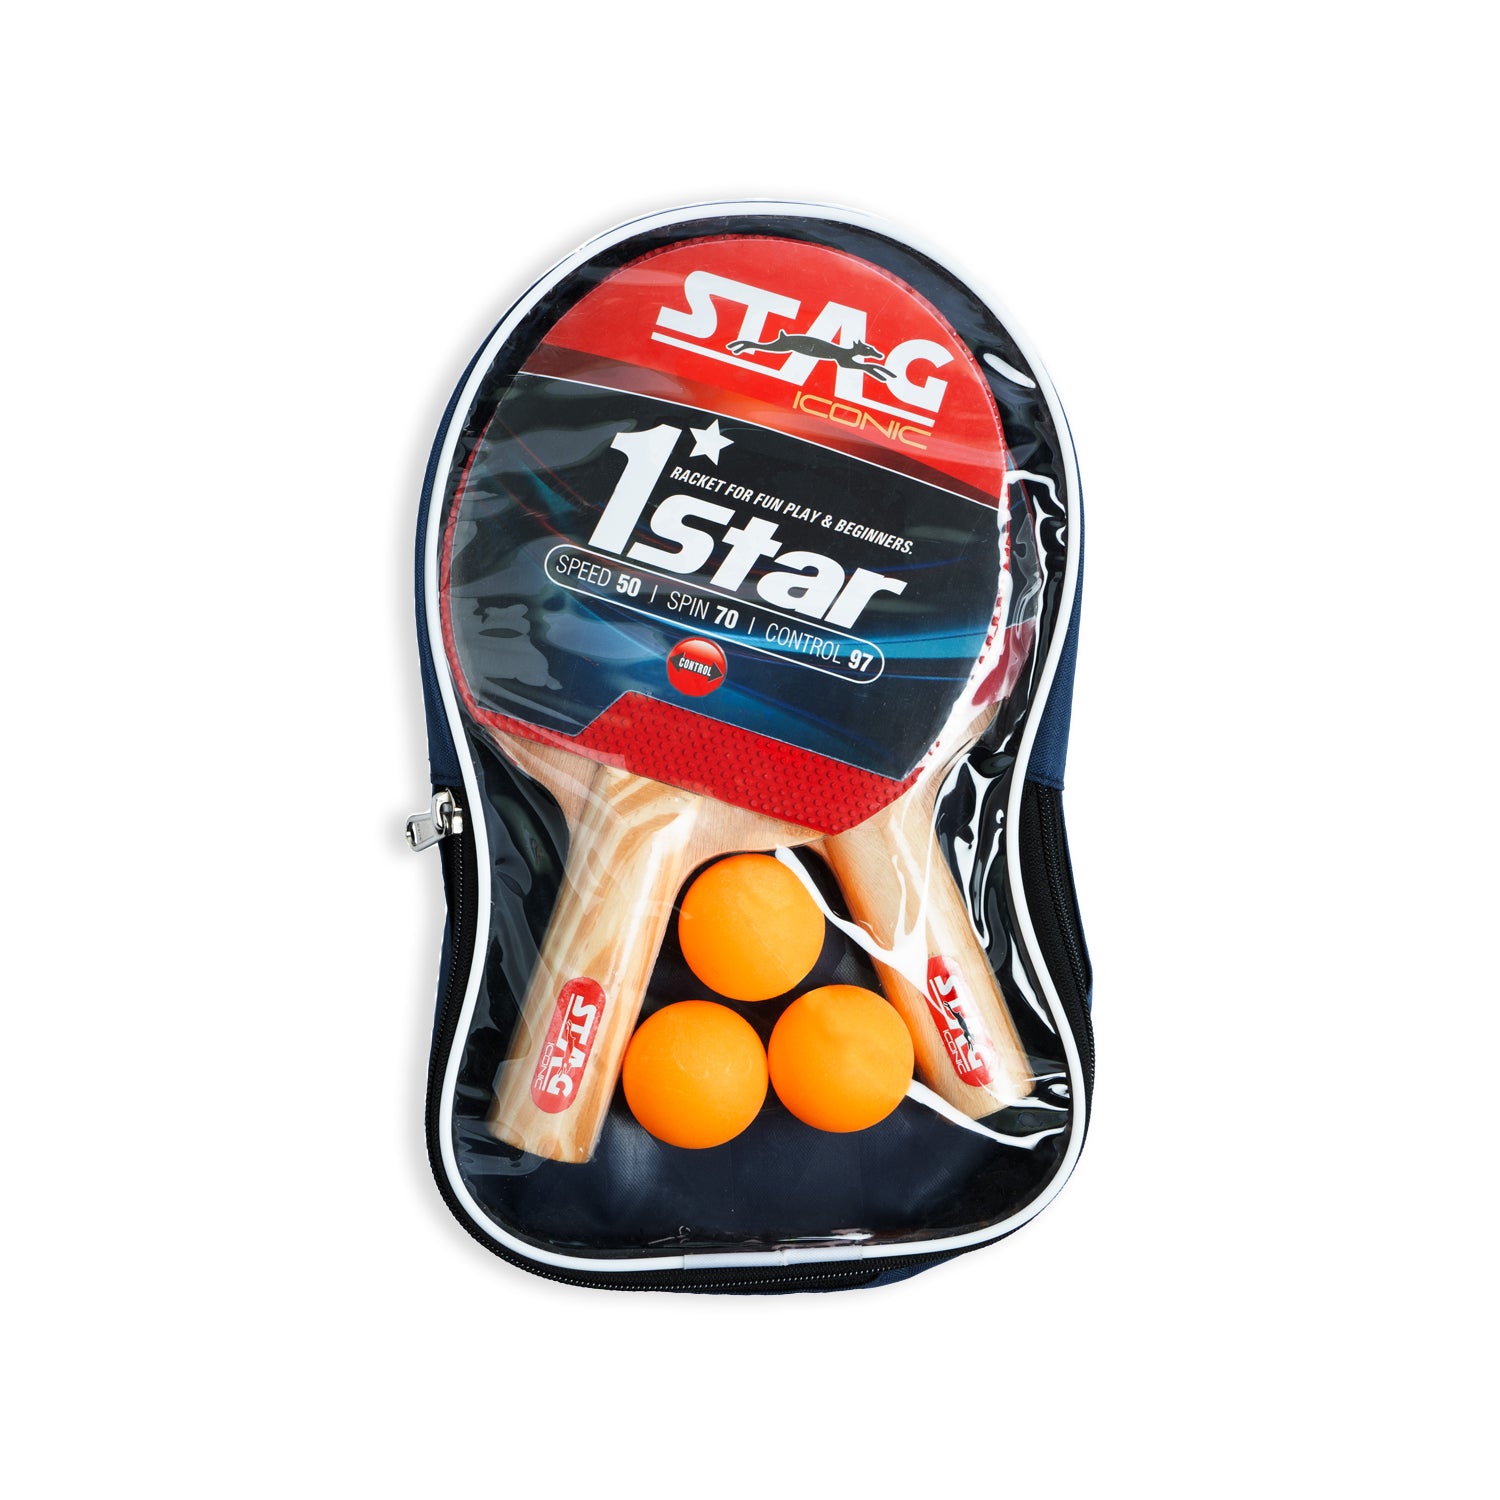 Perceptible Depender de restaurante STAG 1 STAR Professional Table Tennis (T.T) Set Orange